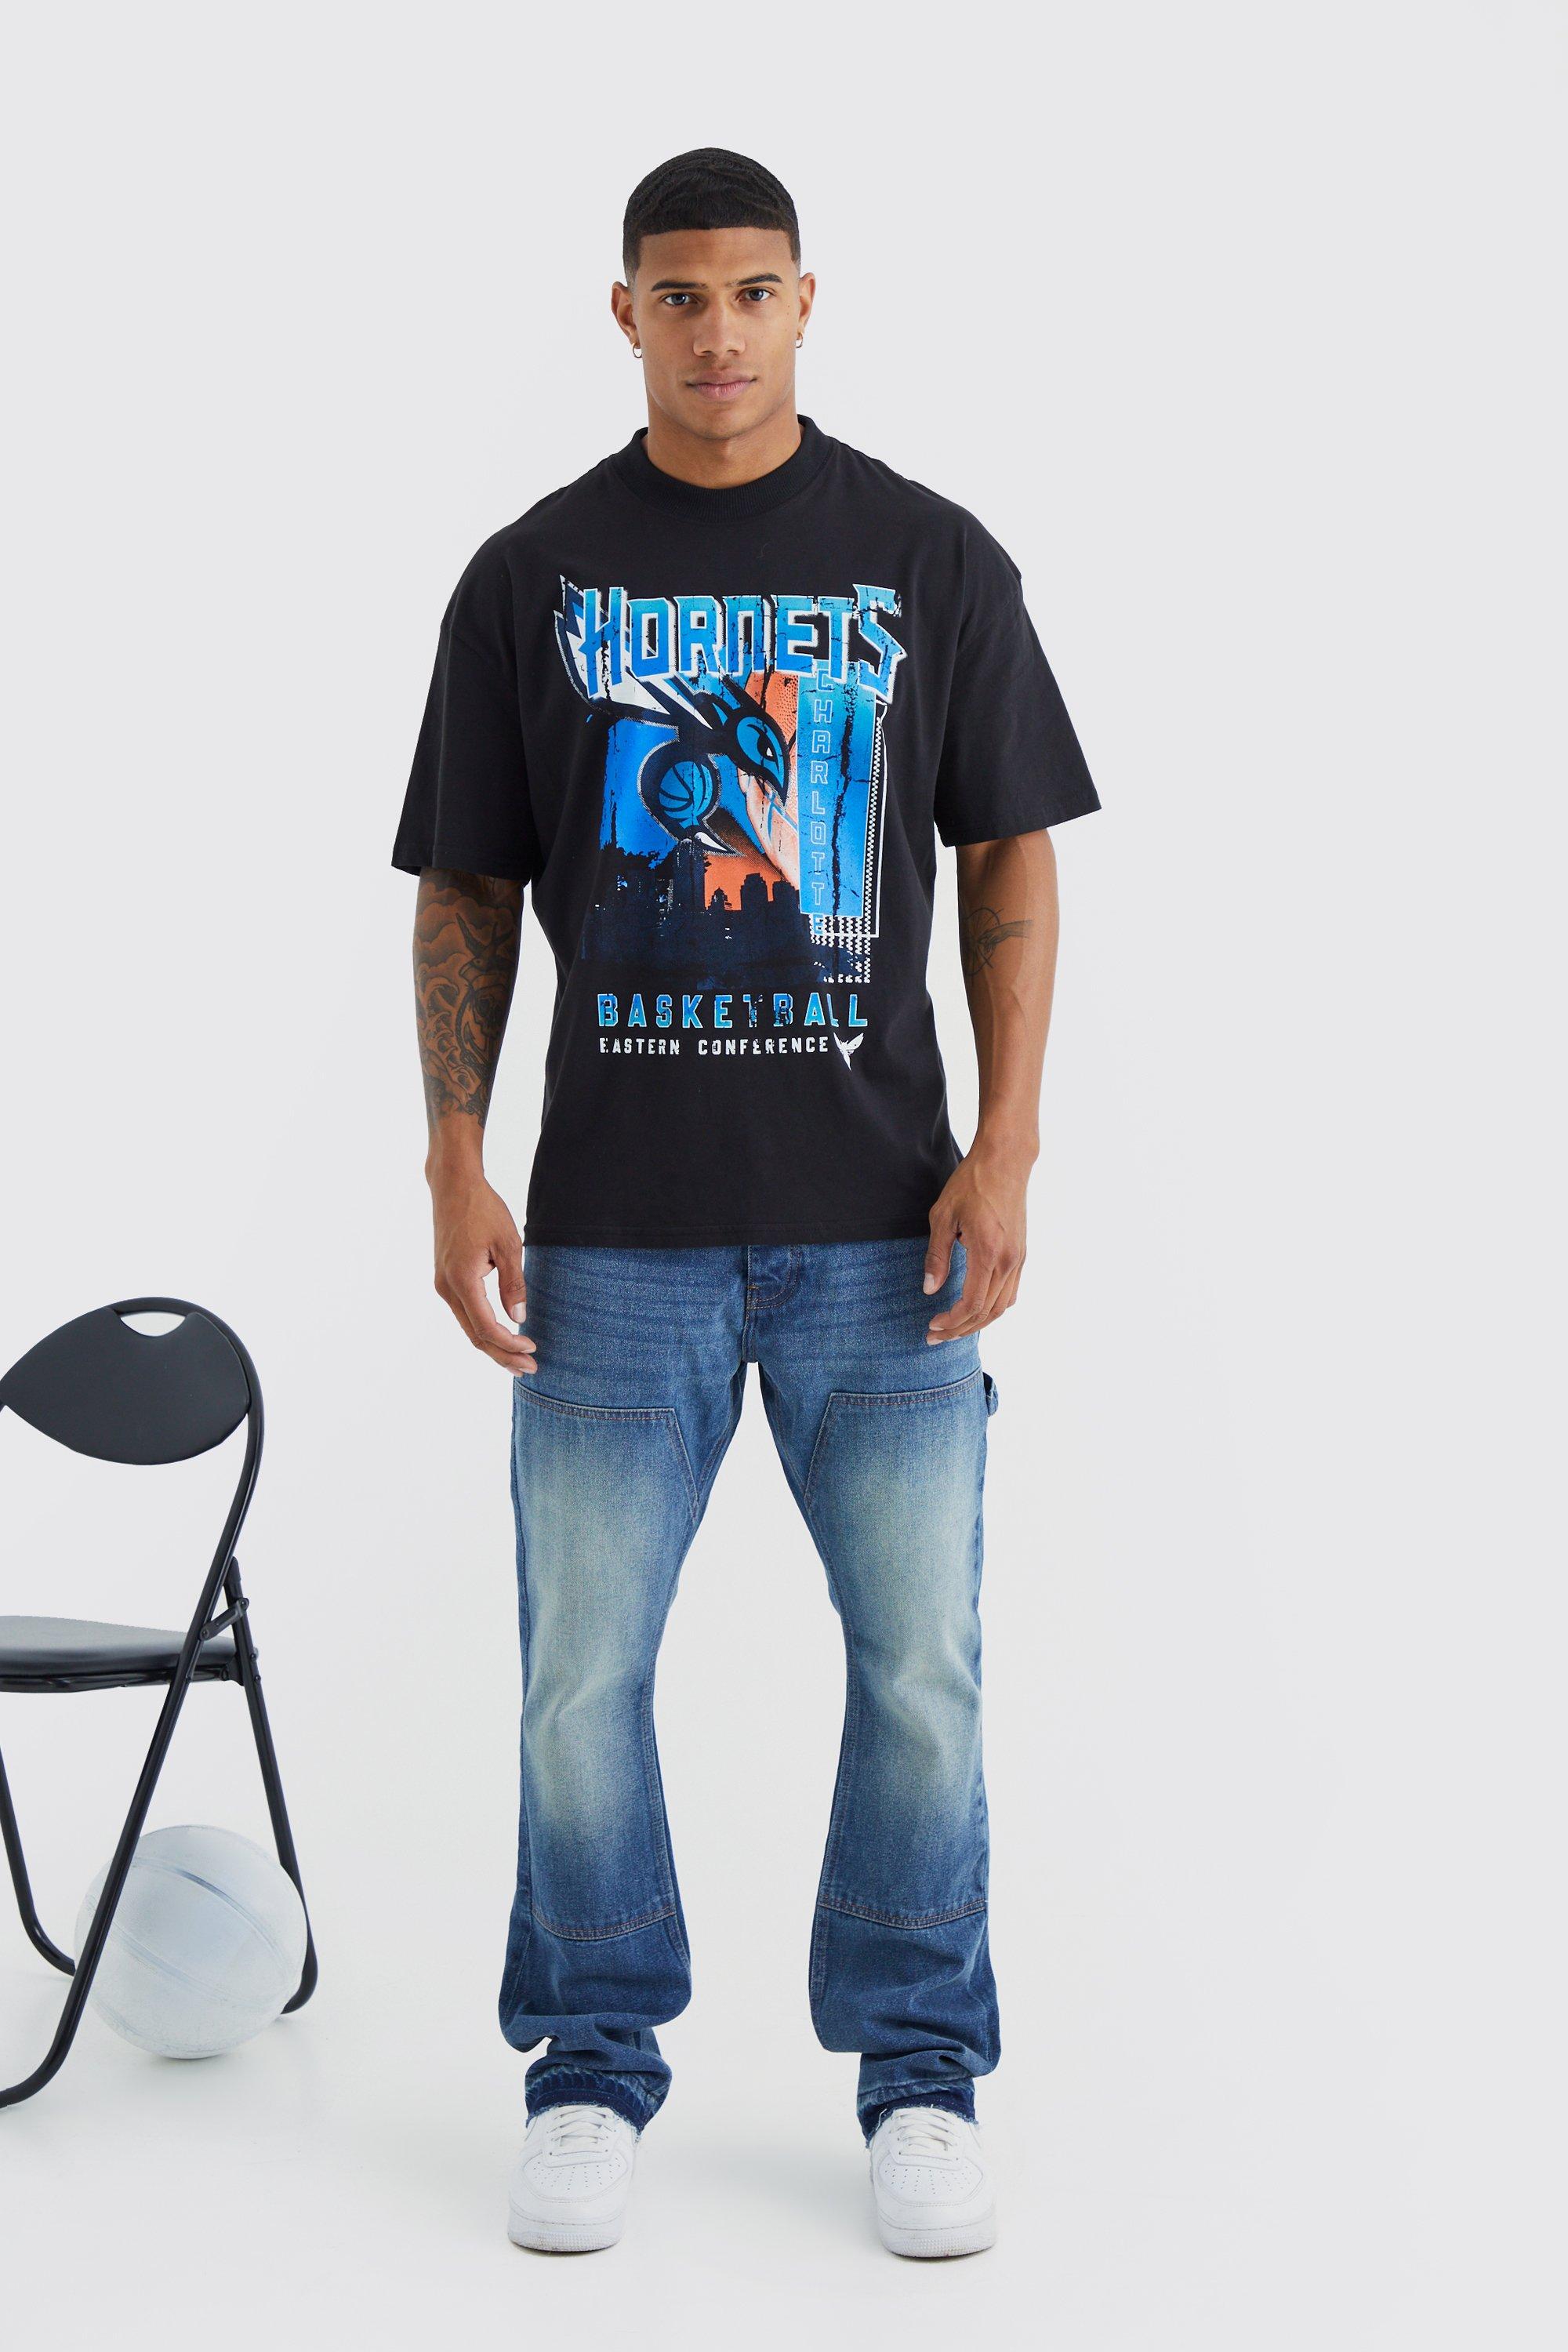 NBA Charlotte Hornets Basketball Throwback Long Sleeve Shirt Size Medium